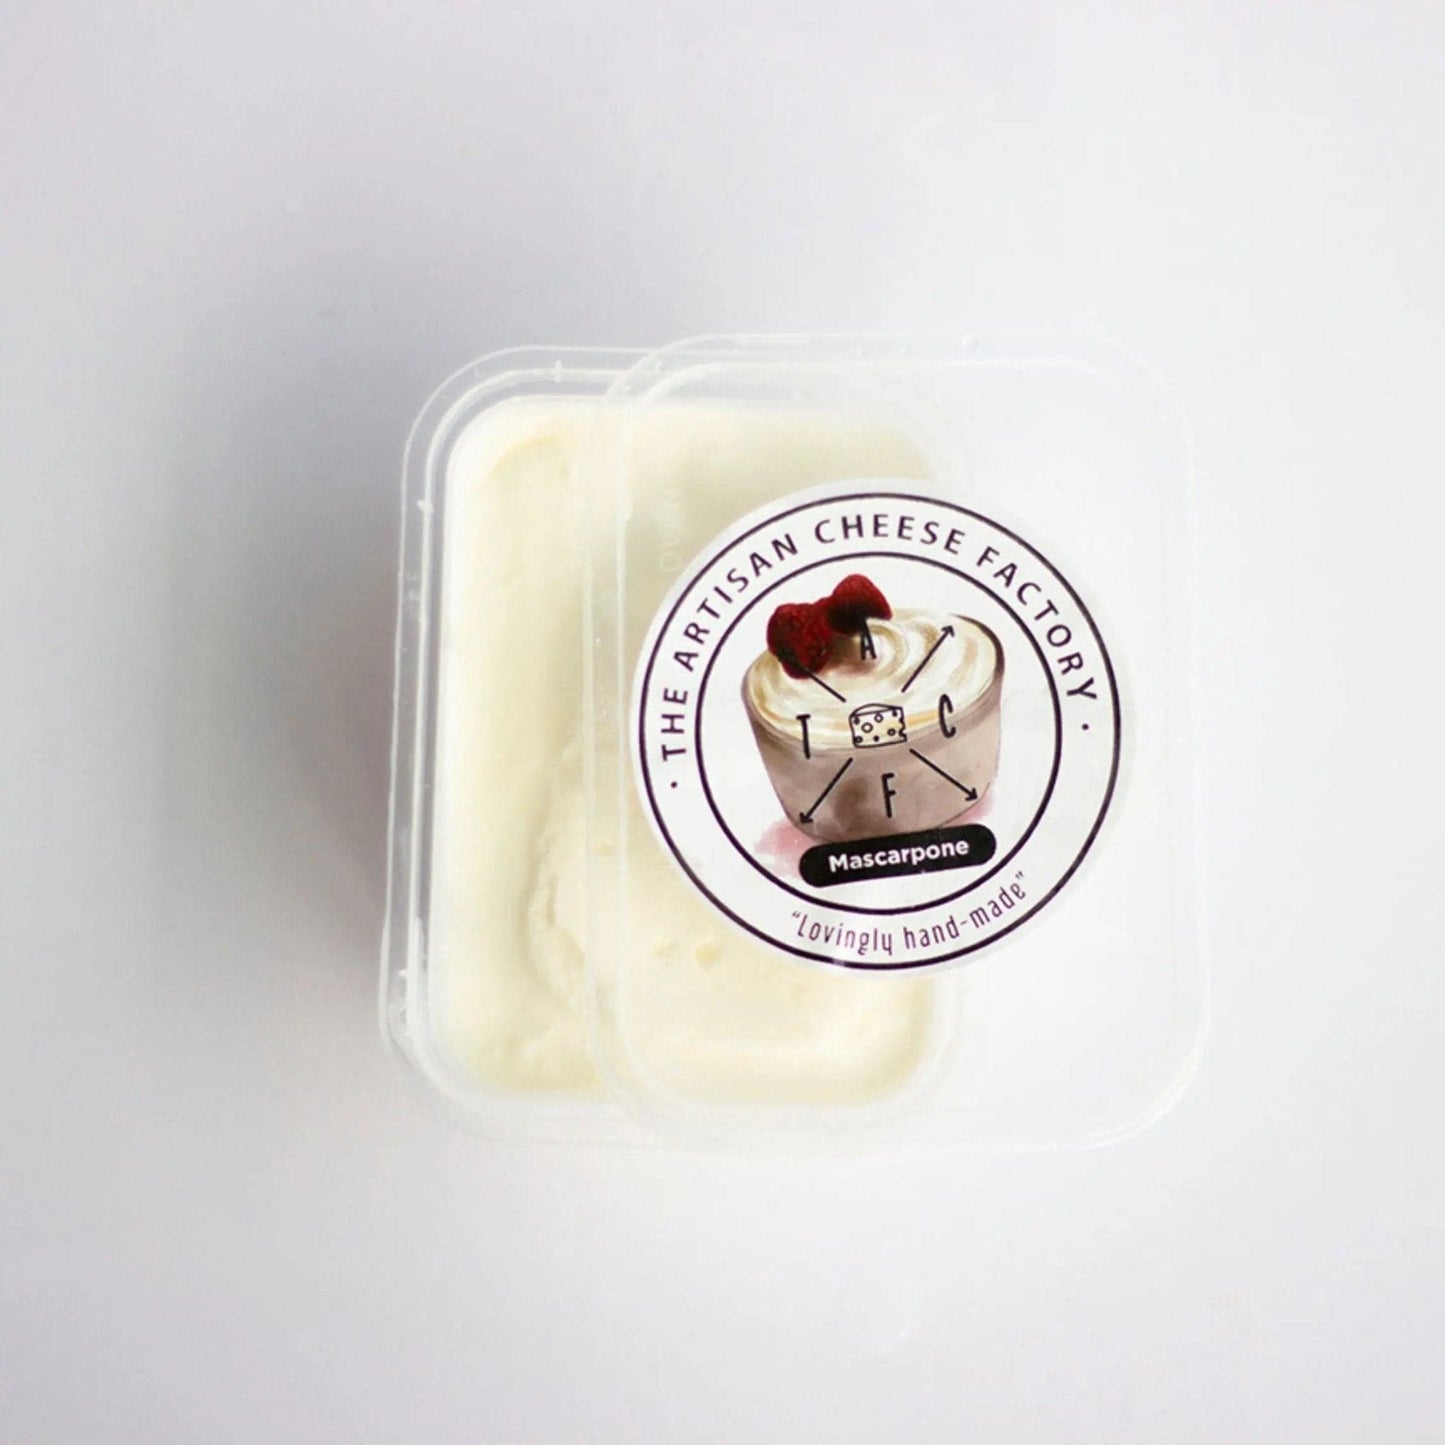 Mascarpone - Artisan Cheese Factory